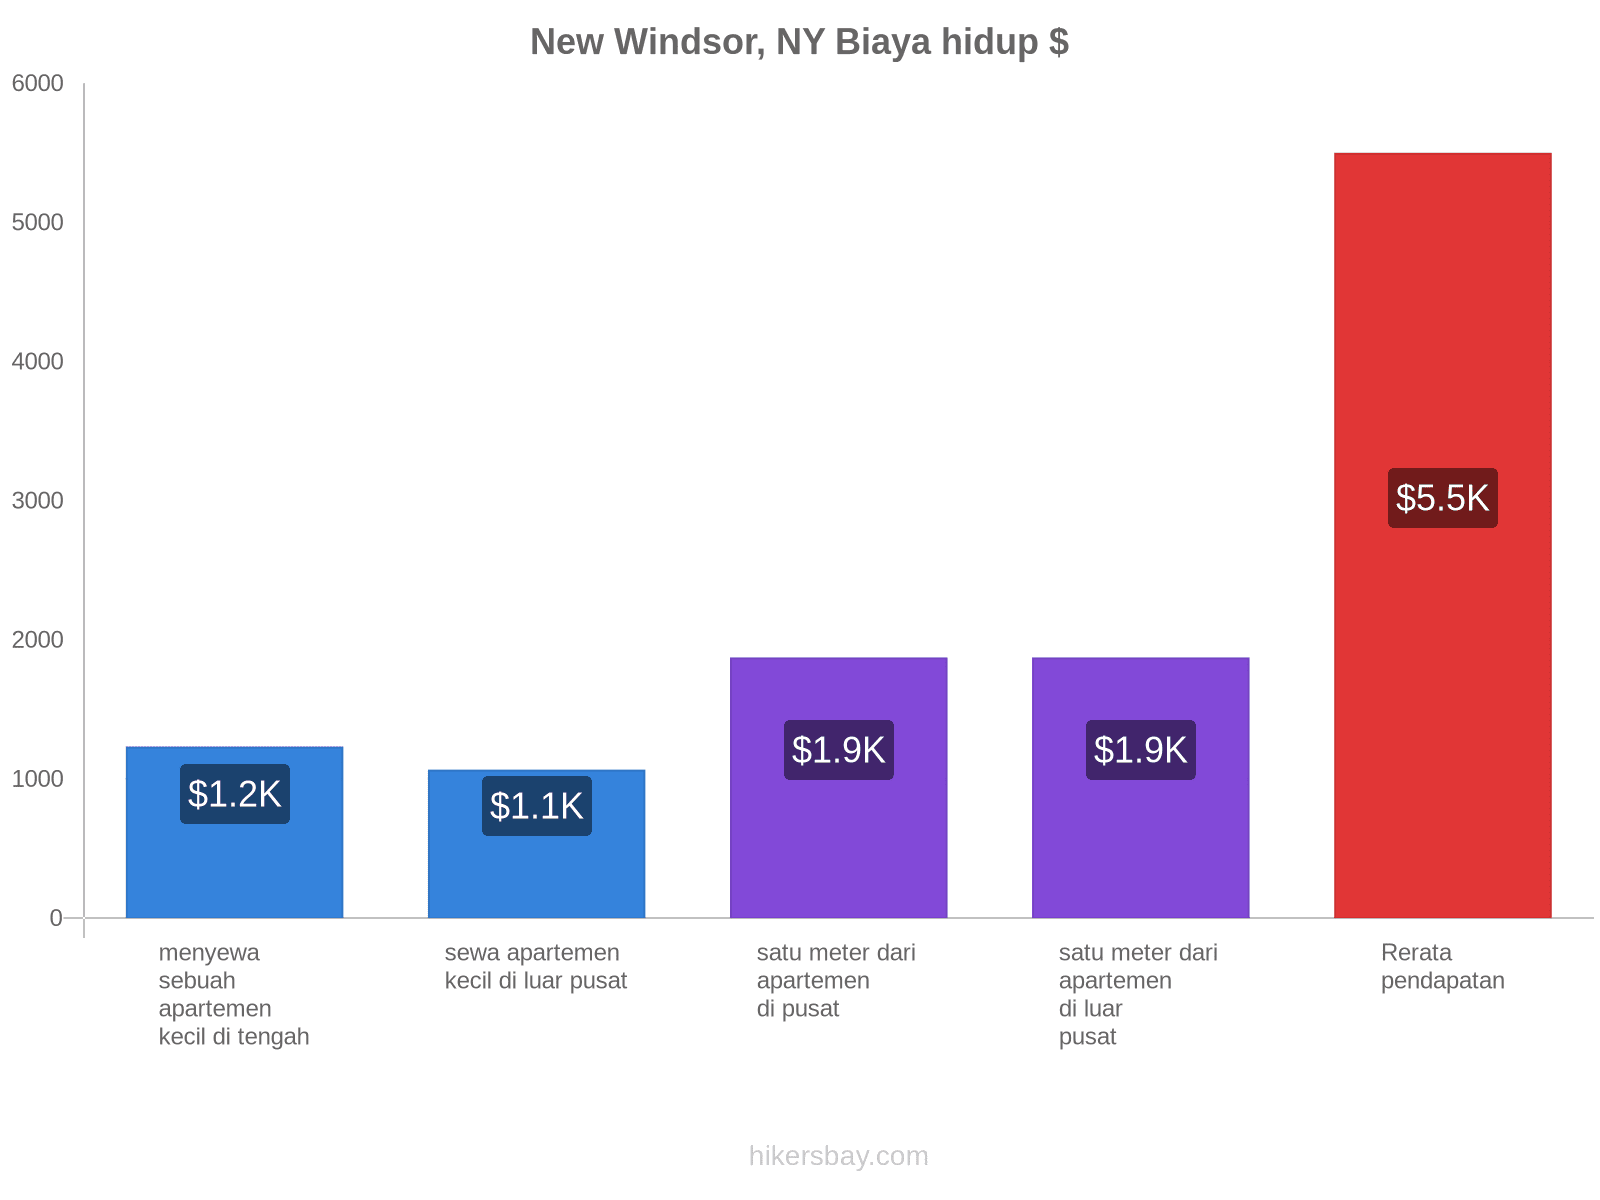 New Windsor, NY biaya hidup hikersbay.com